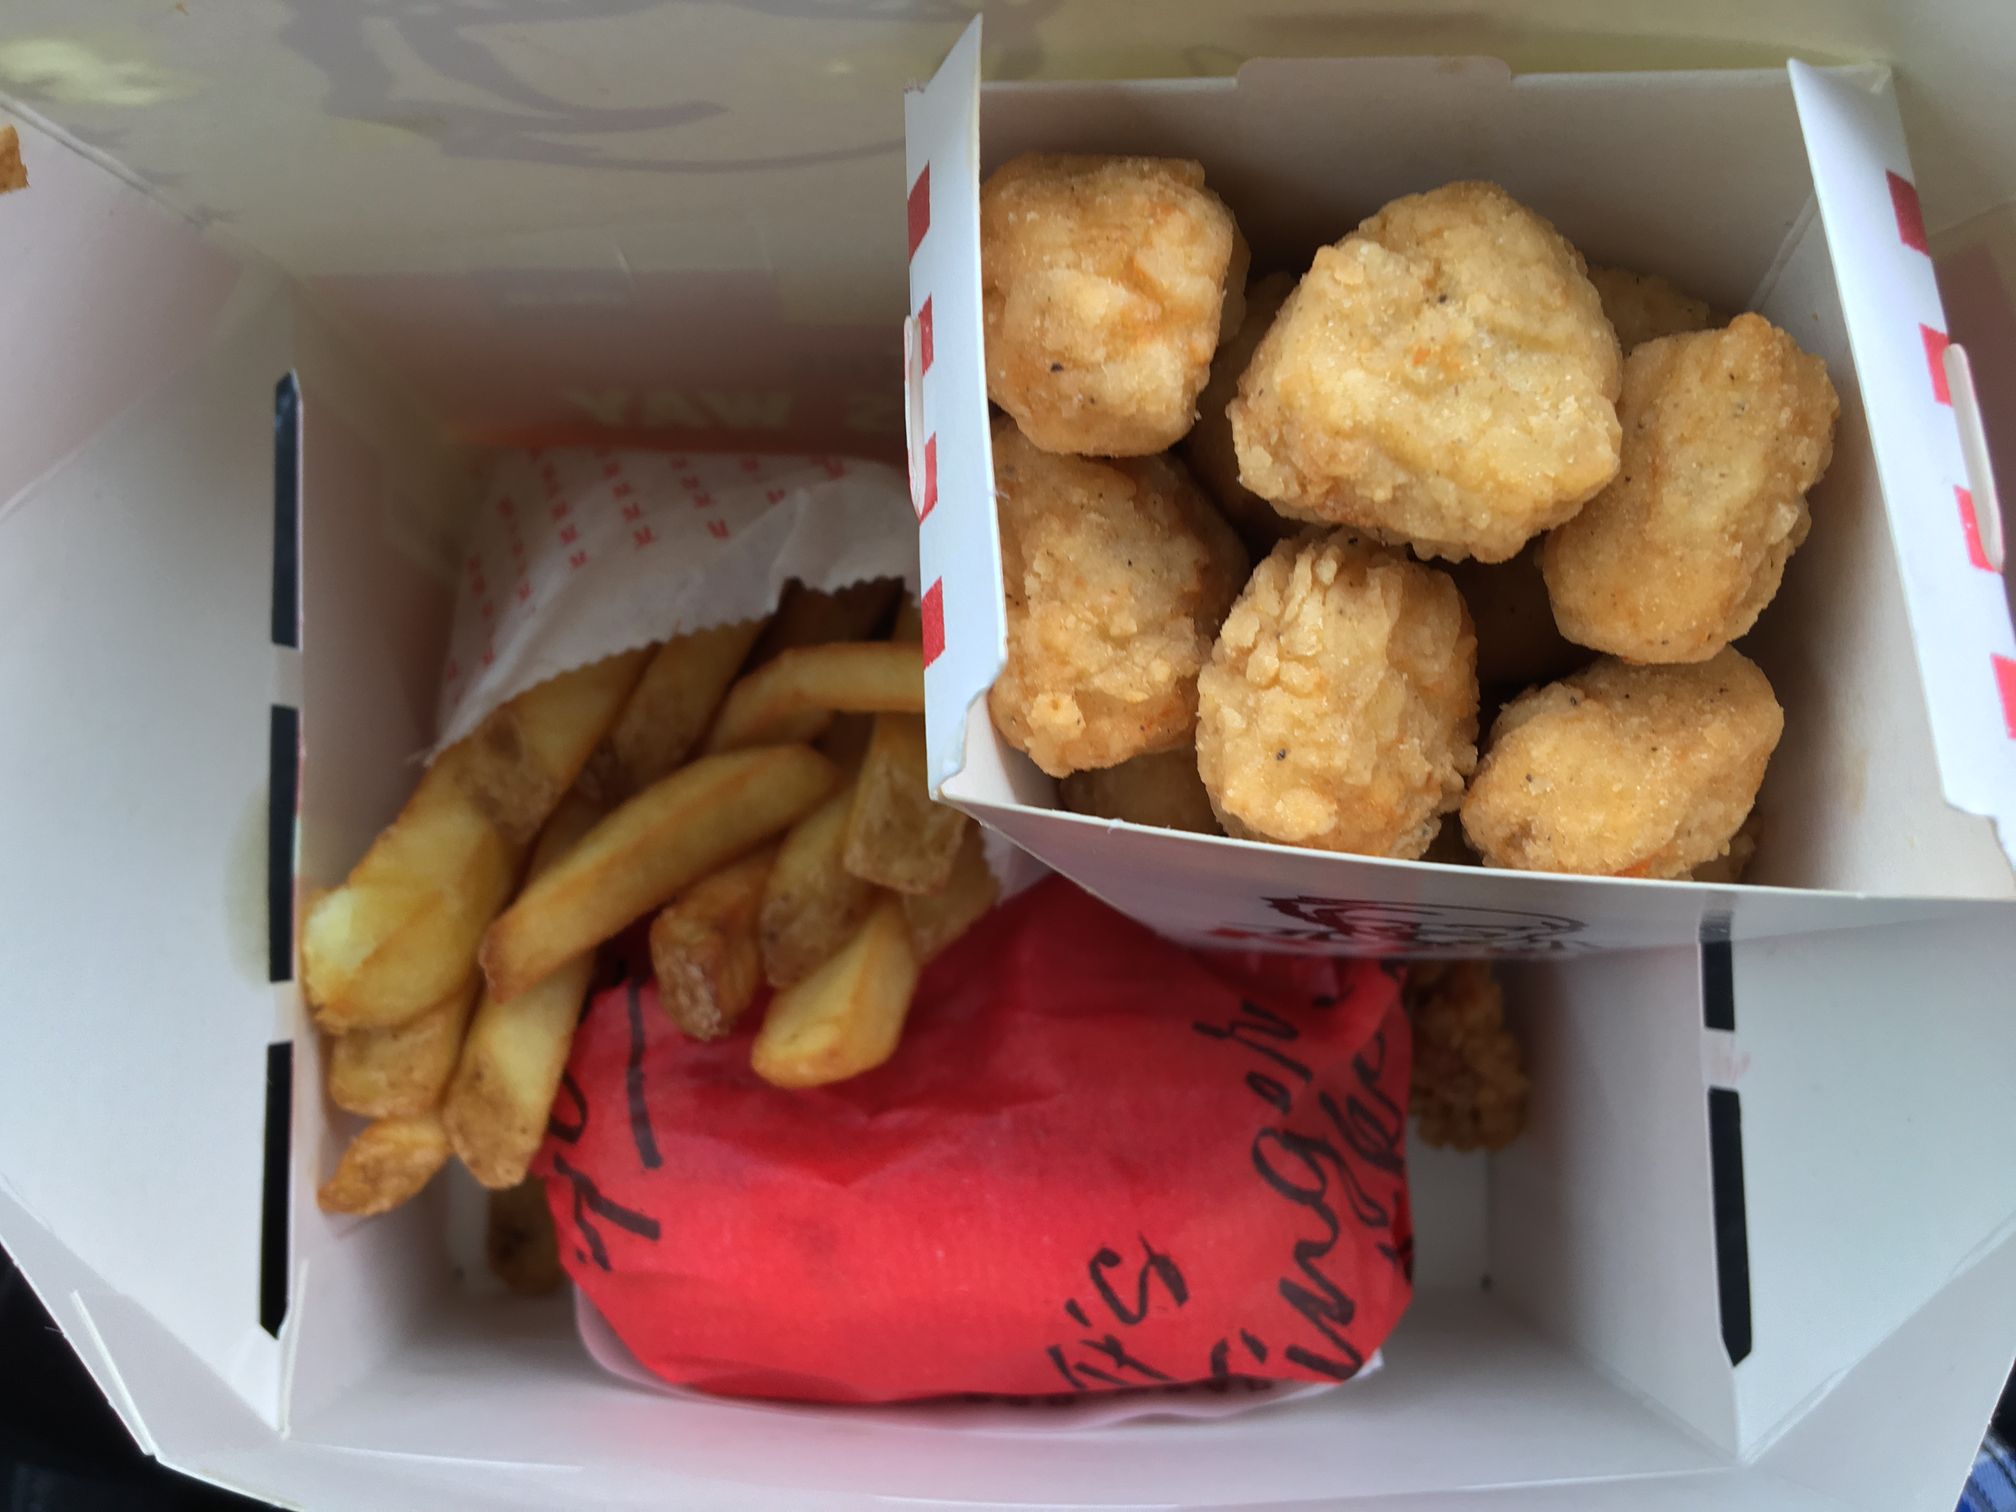 KFC £1.99 Lunch